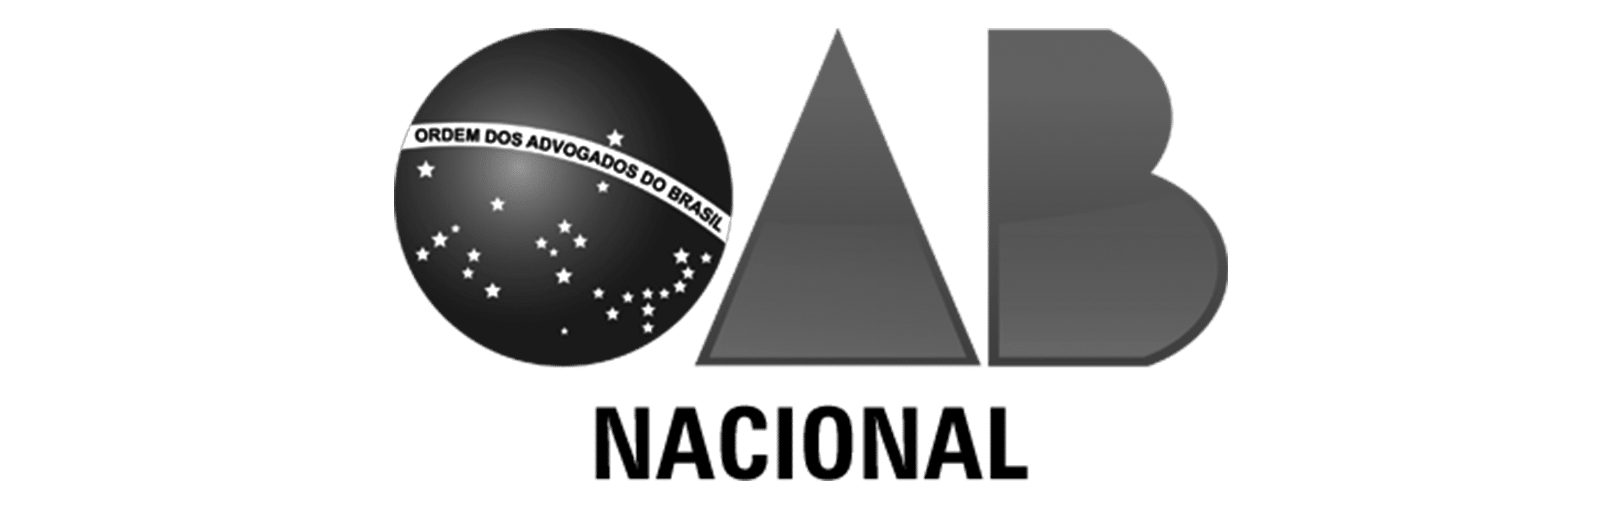 Marketing Jurídico - OAB Nacional